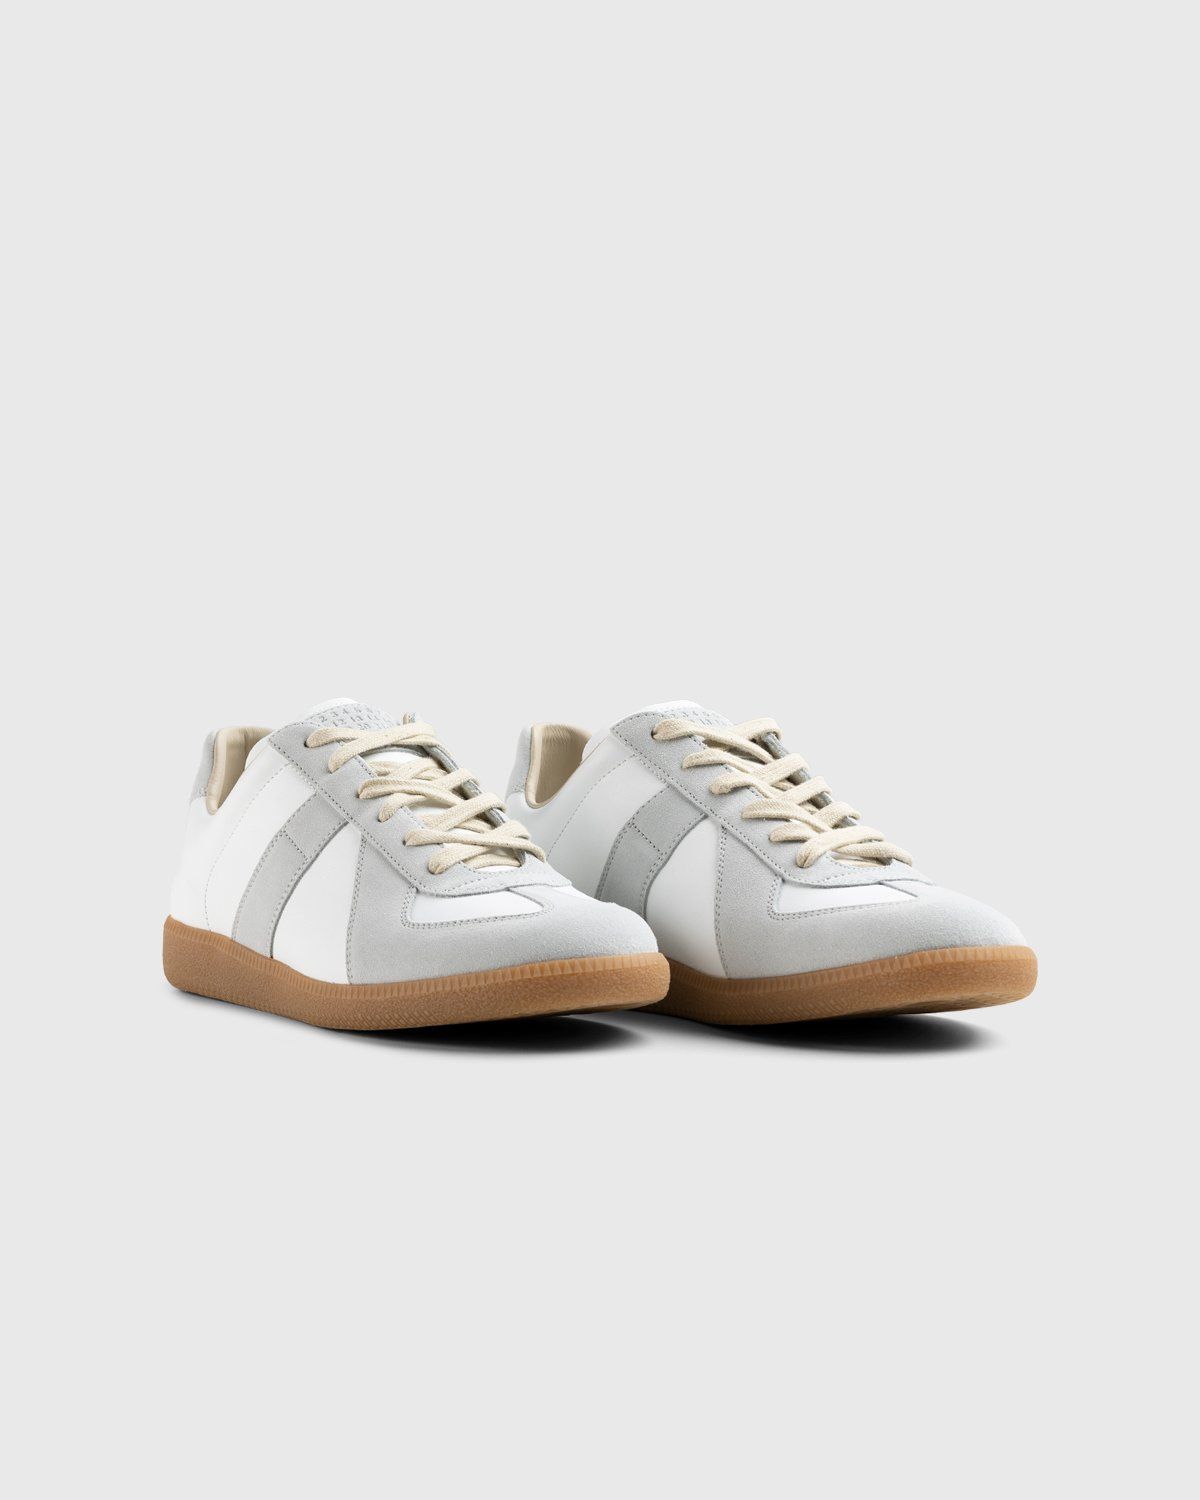 Maison Margiela – Calfskin Replica Sneakers Light Grey - Low Top Sneakers - Grey - Image 2